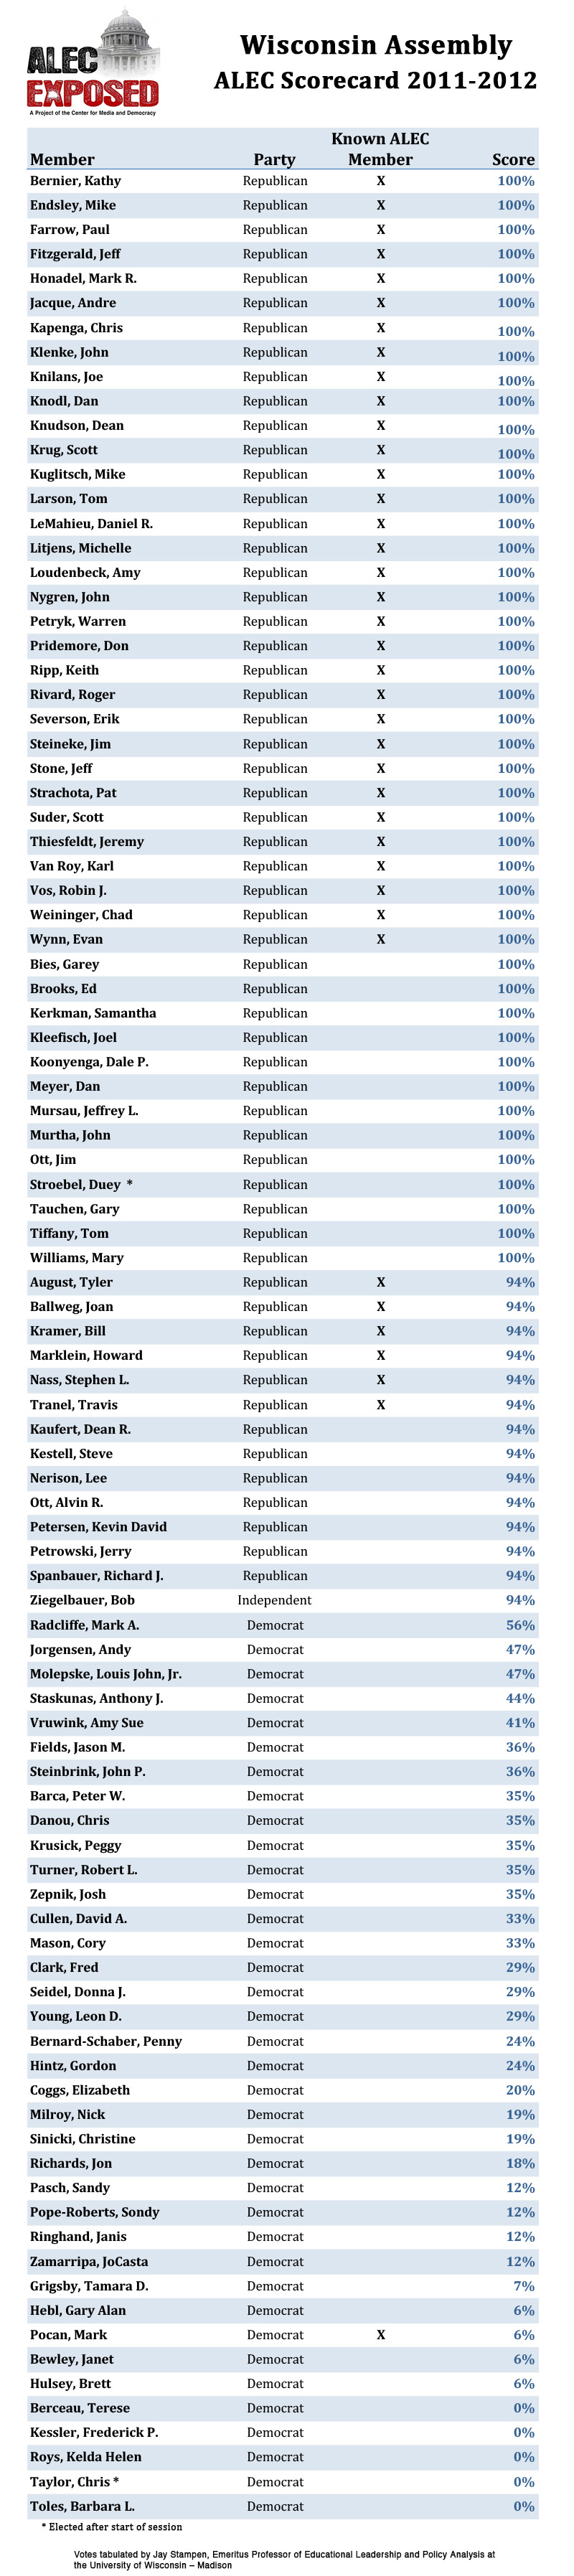 Wisconsin Assembly ALEC voting scorecard 2011-2012 session